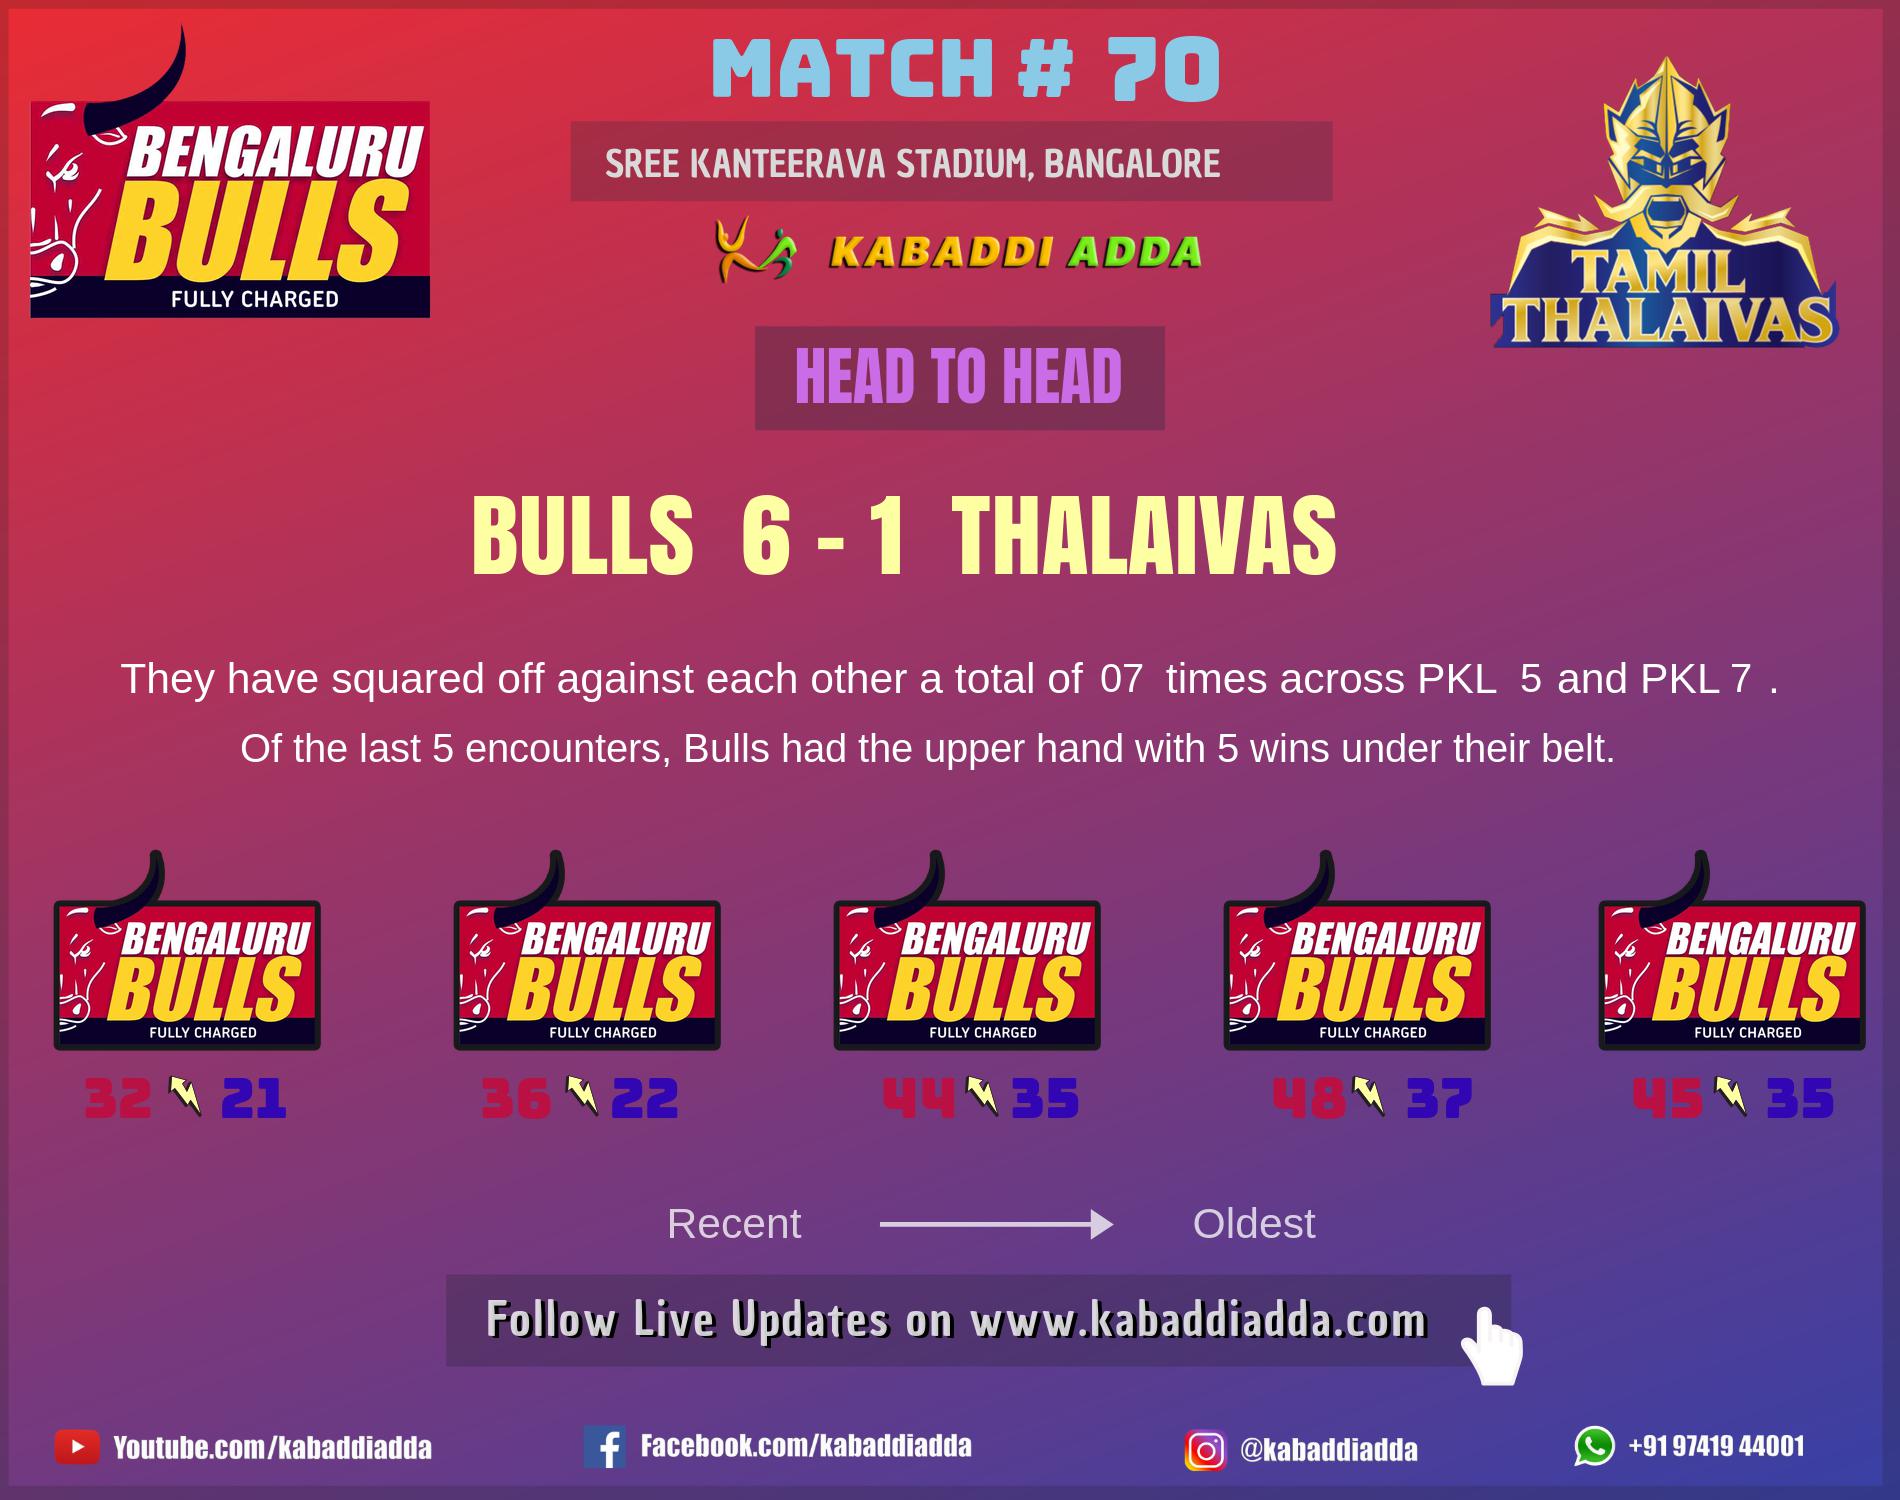 Bengaluru Bulls is playing against Tamil Thalaivas